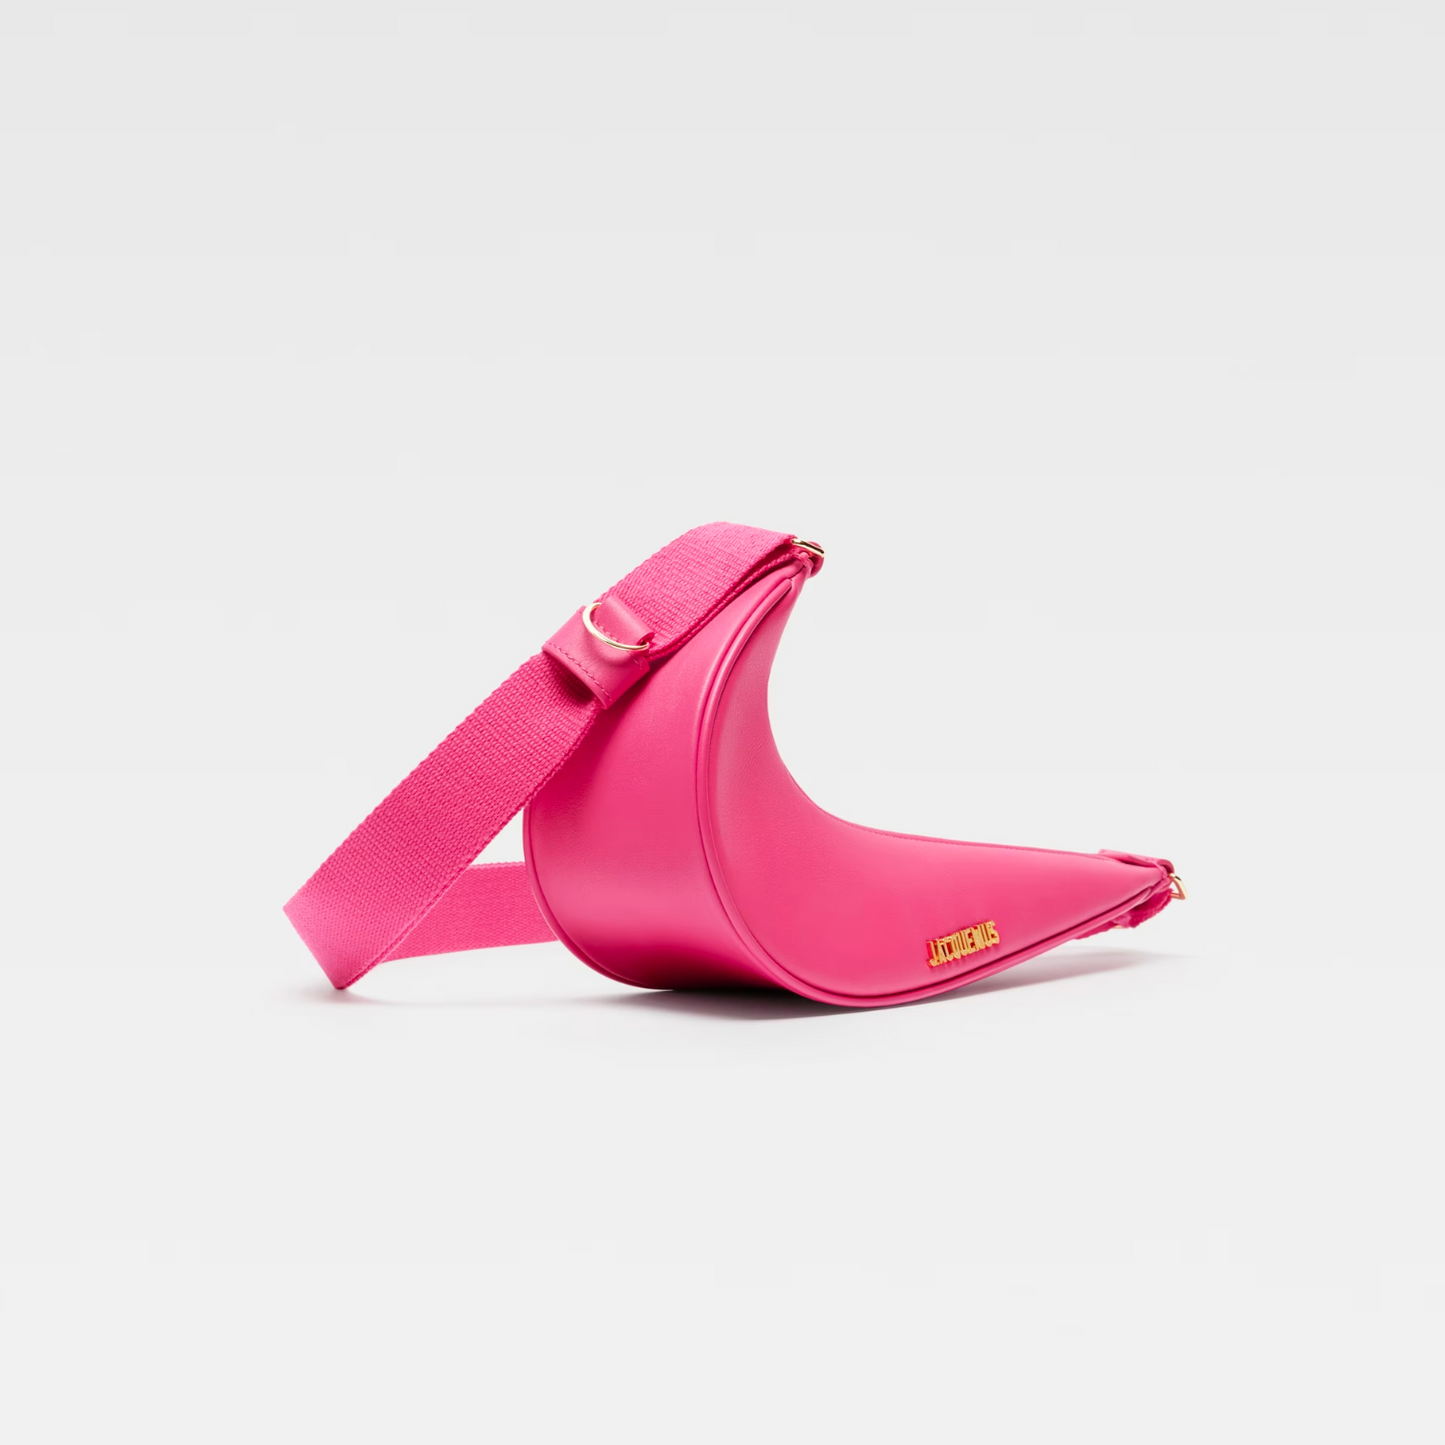 Le sac Swoosh Jacquemus x Nike Pink